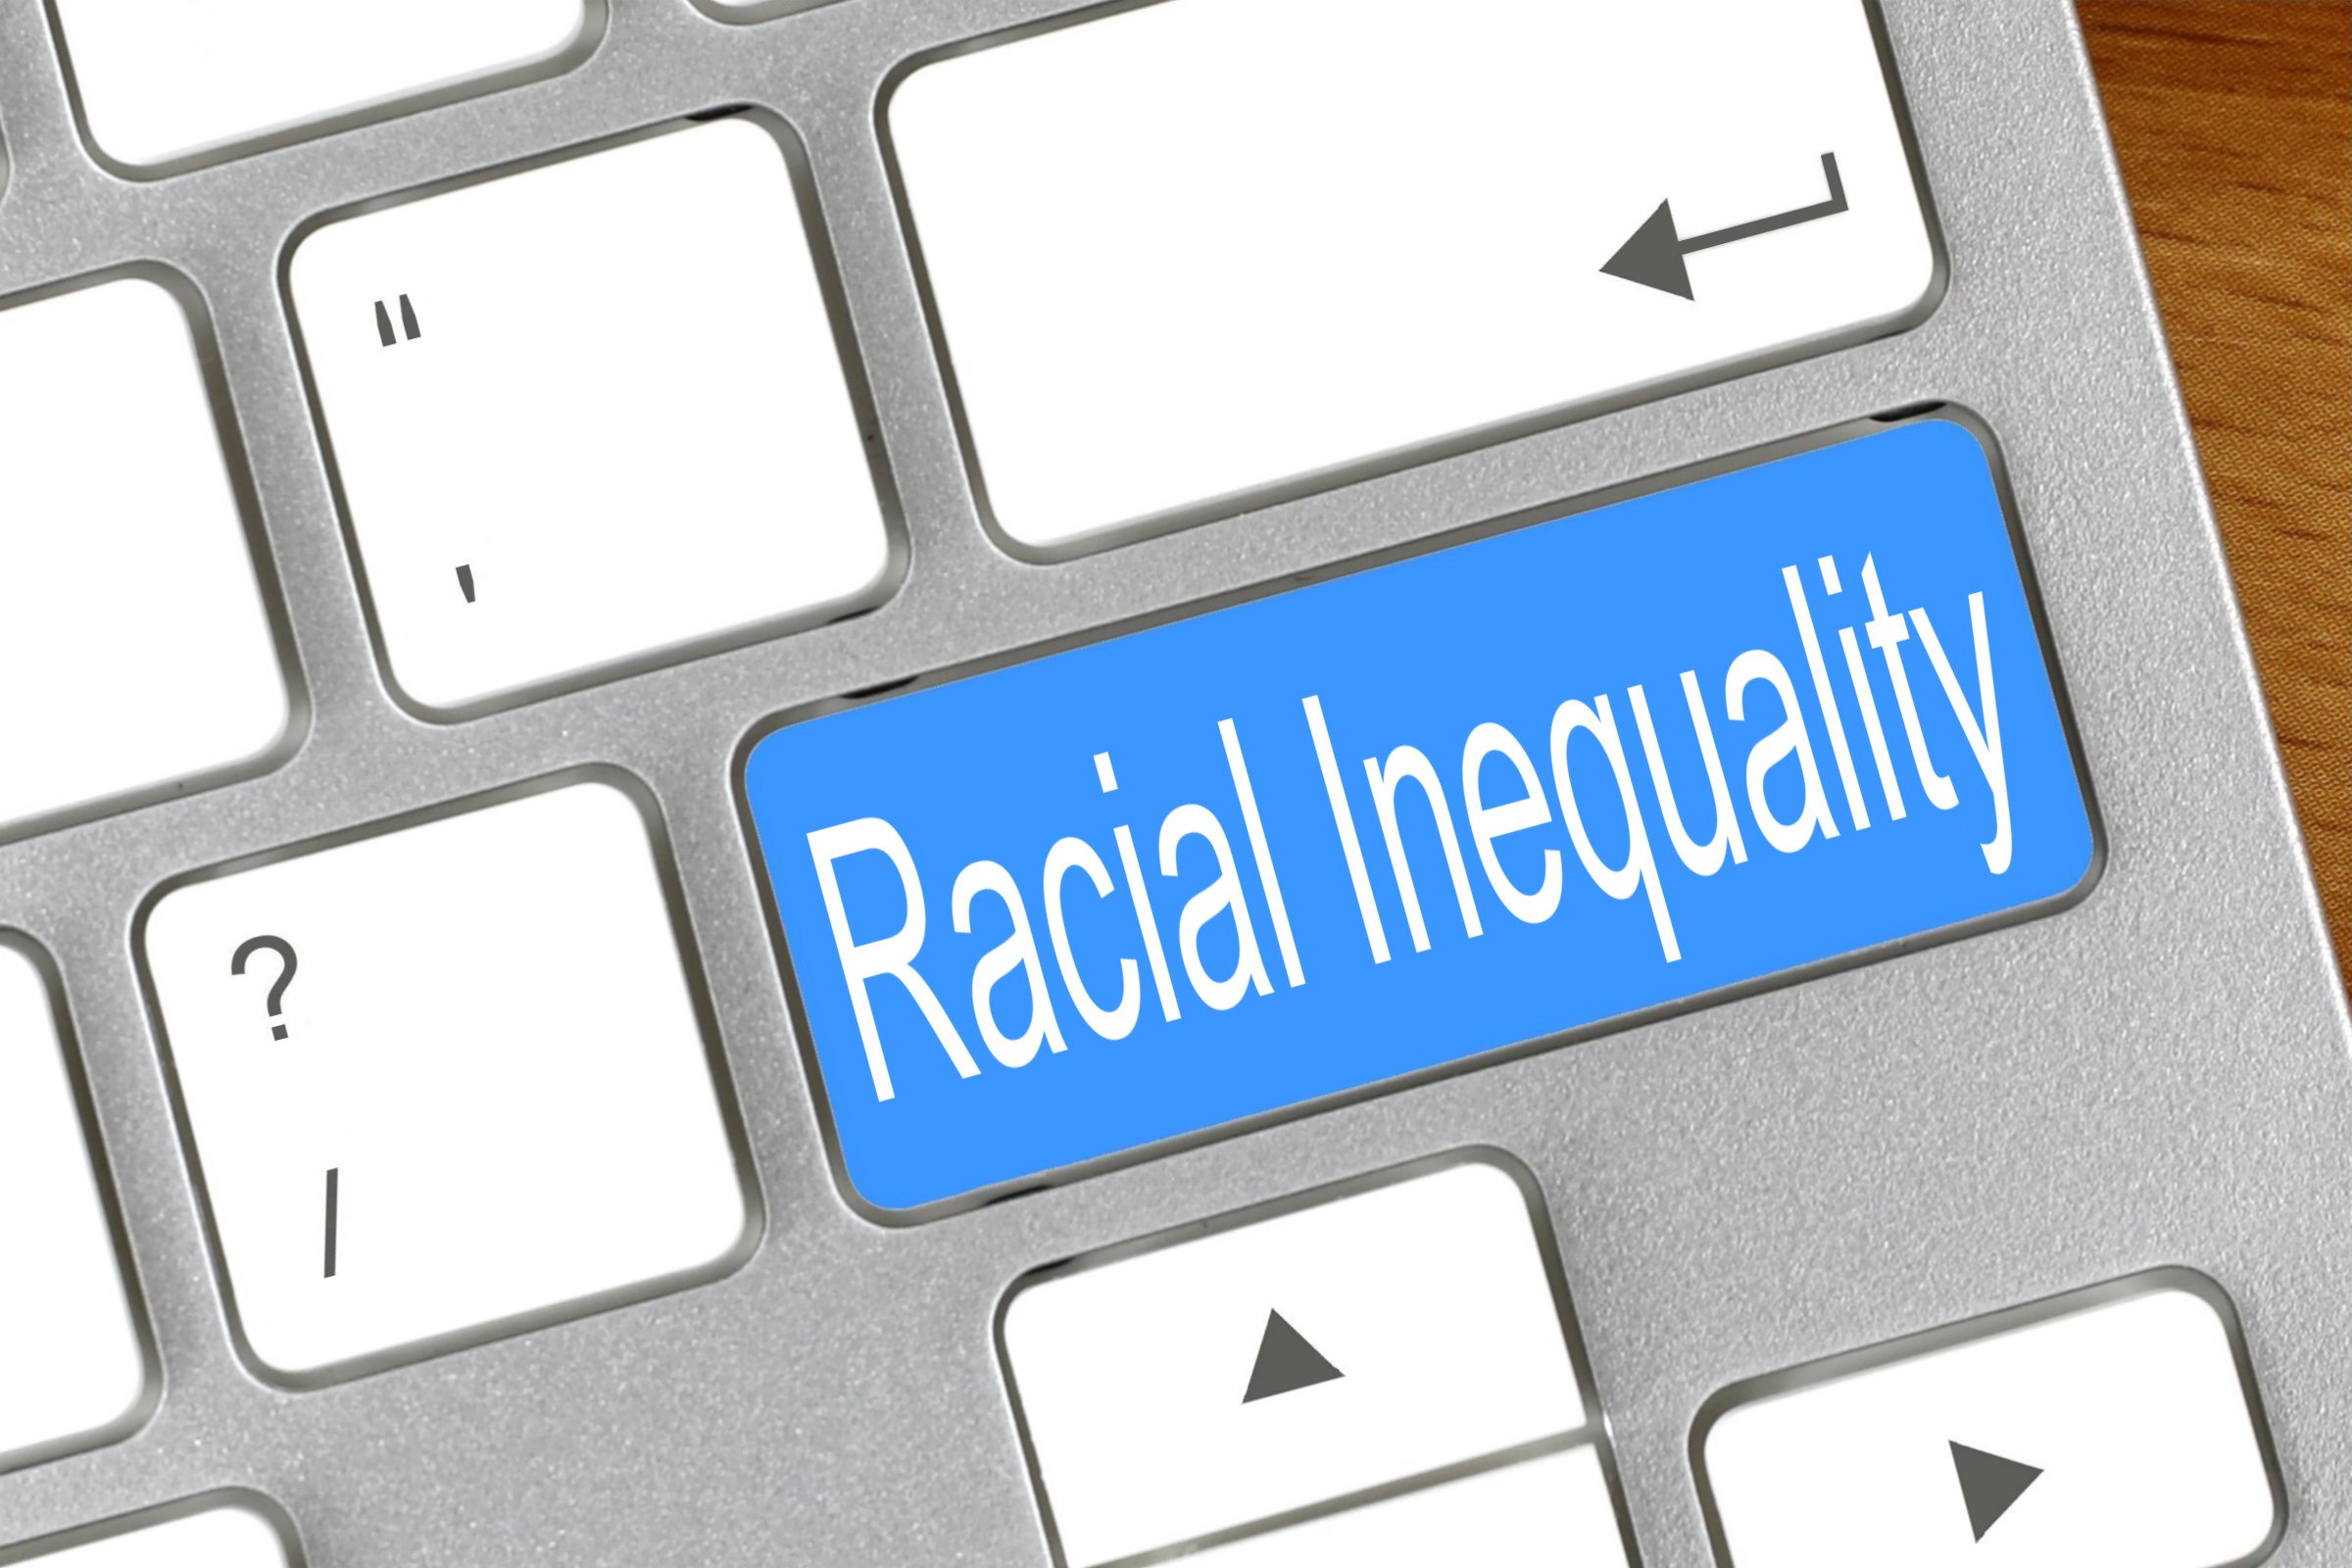 racial inequality